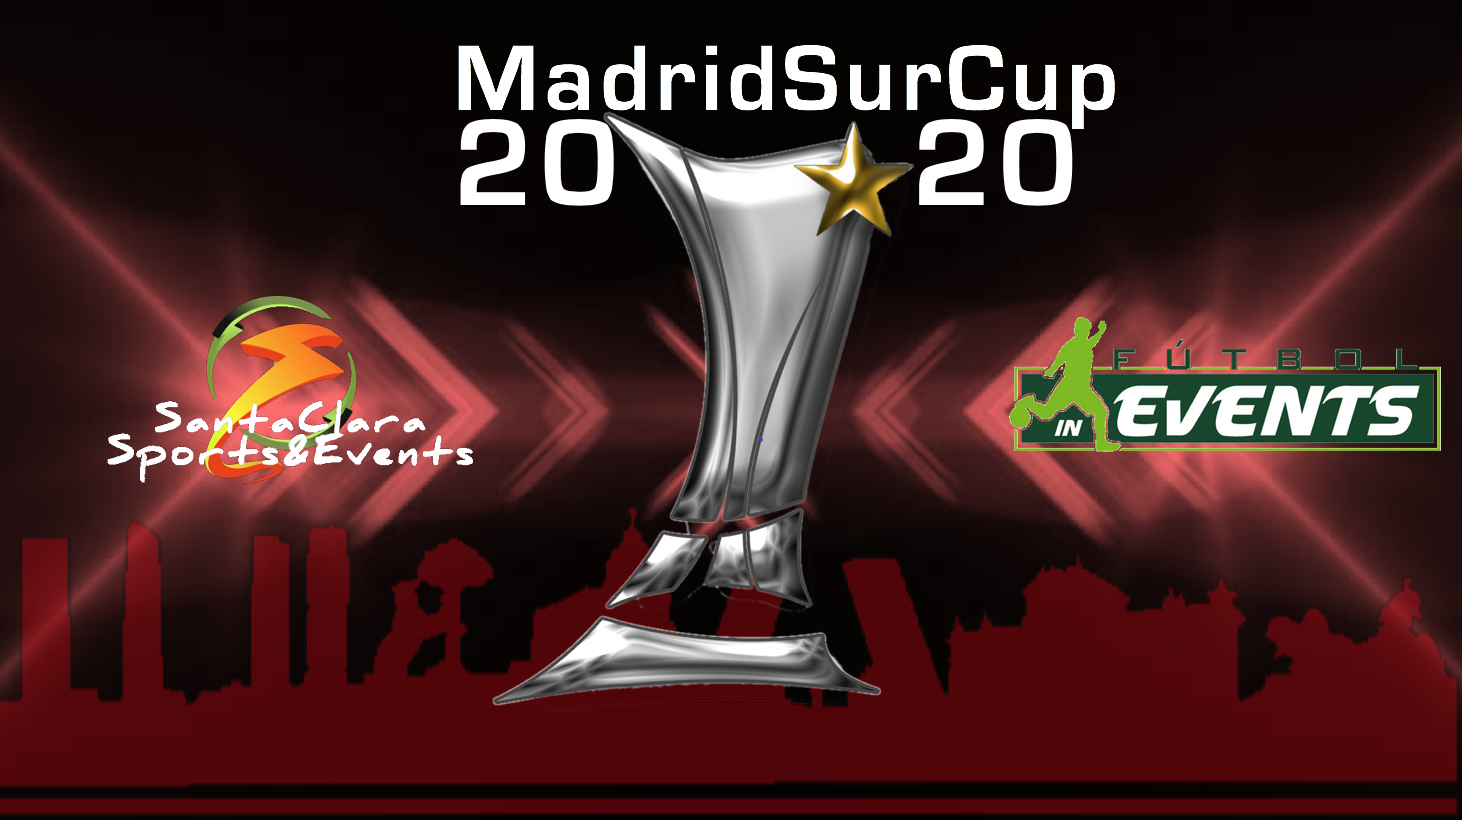 Madrid Sur Cup